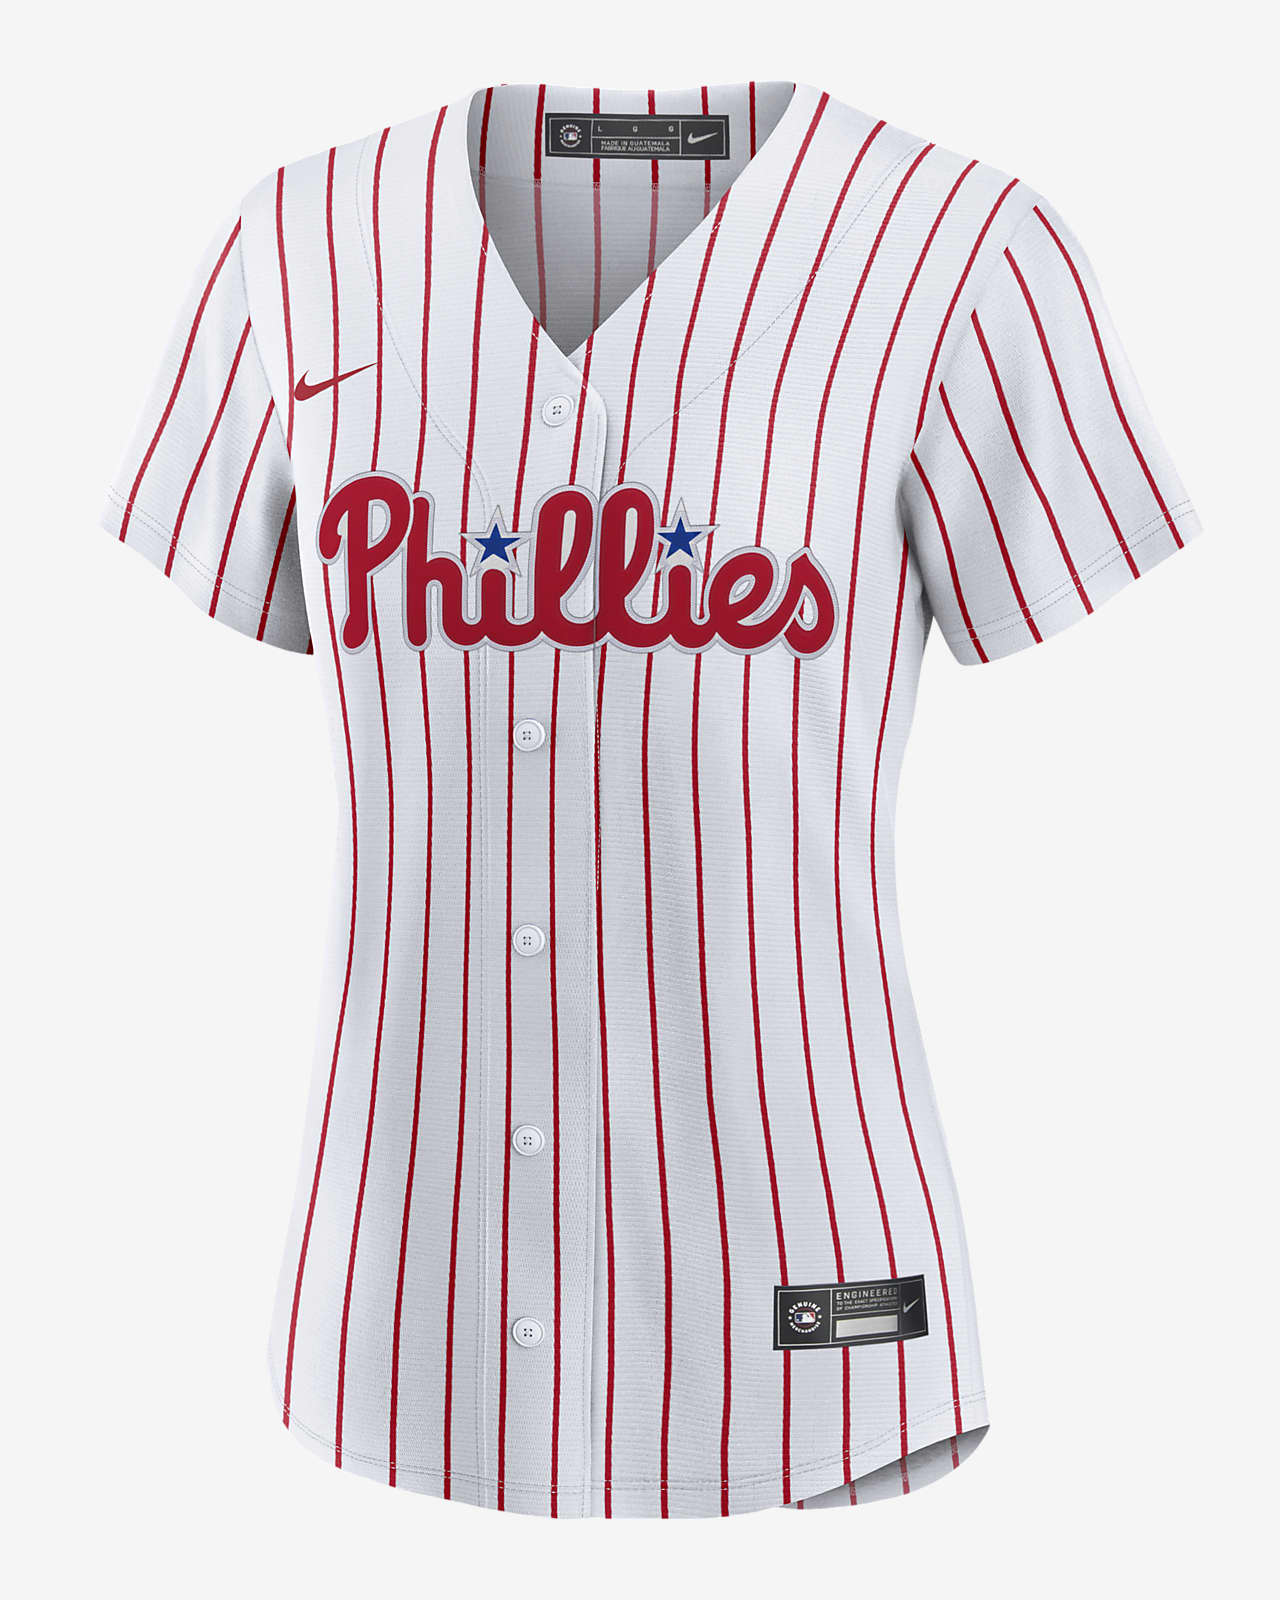 MLB Philadelphia Phillies (Trea Turner) Women's Replica Baseball Jersey